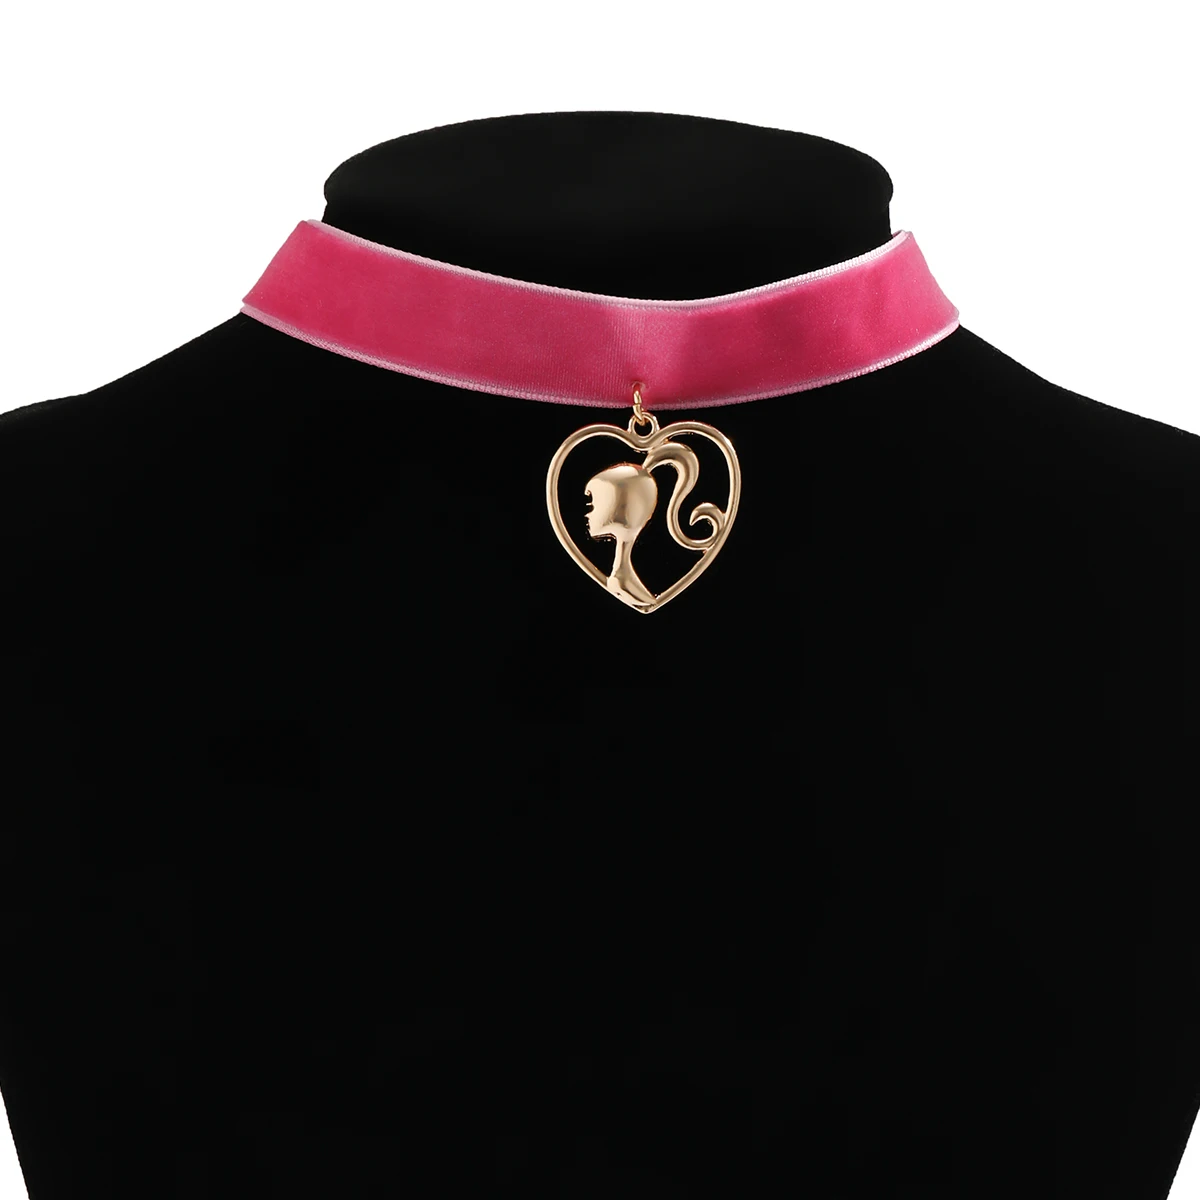 Sexy Sparkles Pink Velvet Choker Necklace for Women Girls Gothic